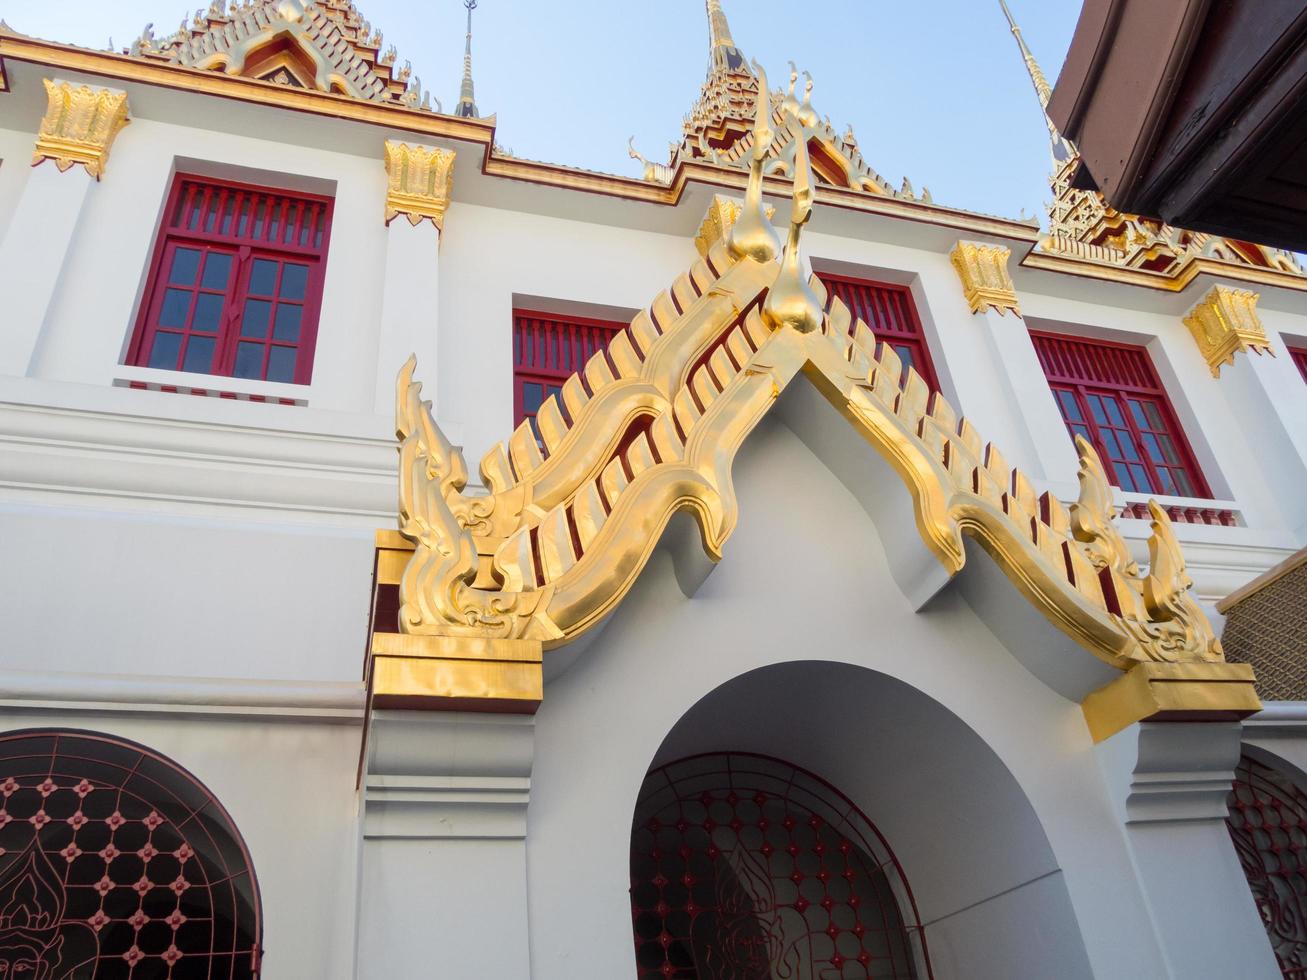 loha prasat wat ratchanatda tempel in bangkok thailand. foto